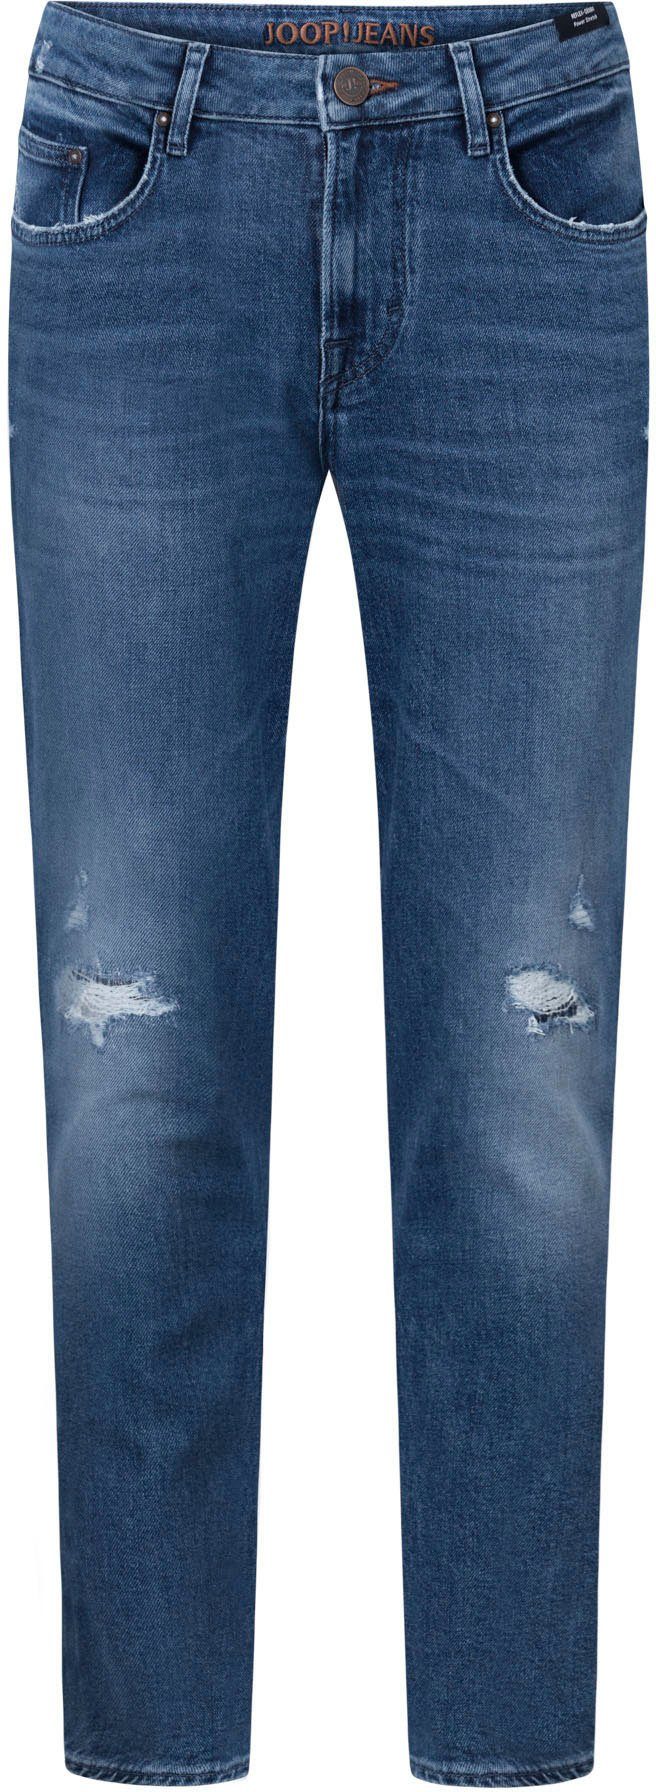 Joop Jeans Straight-Jeans Form in 5-Pocket